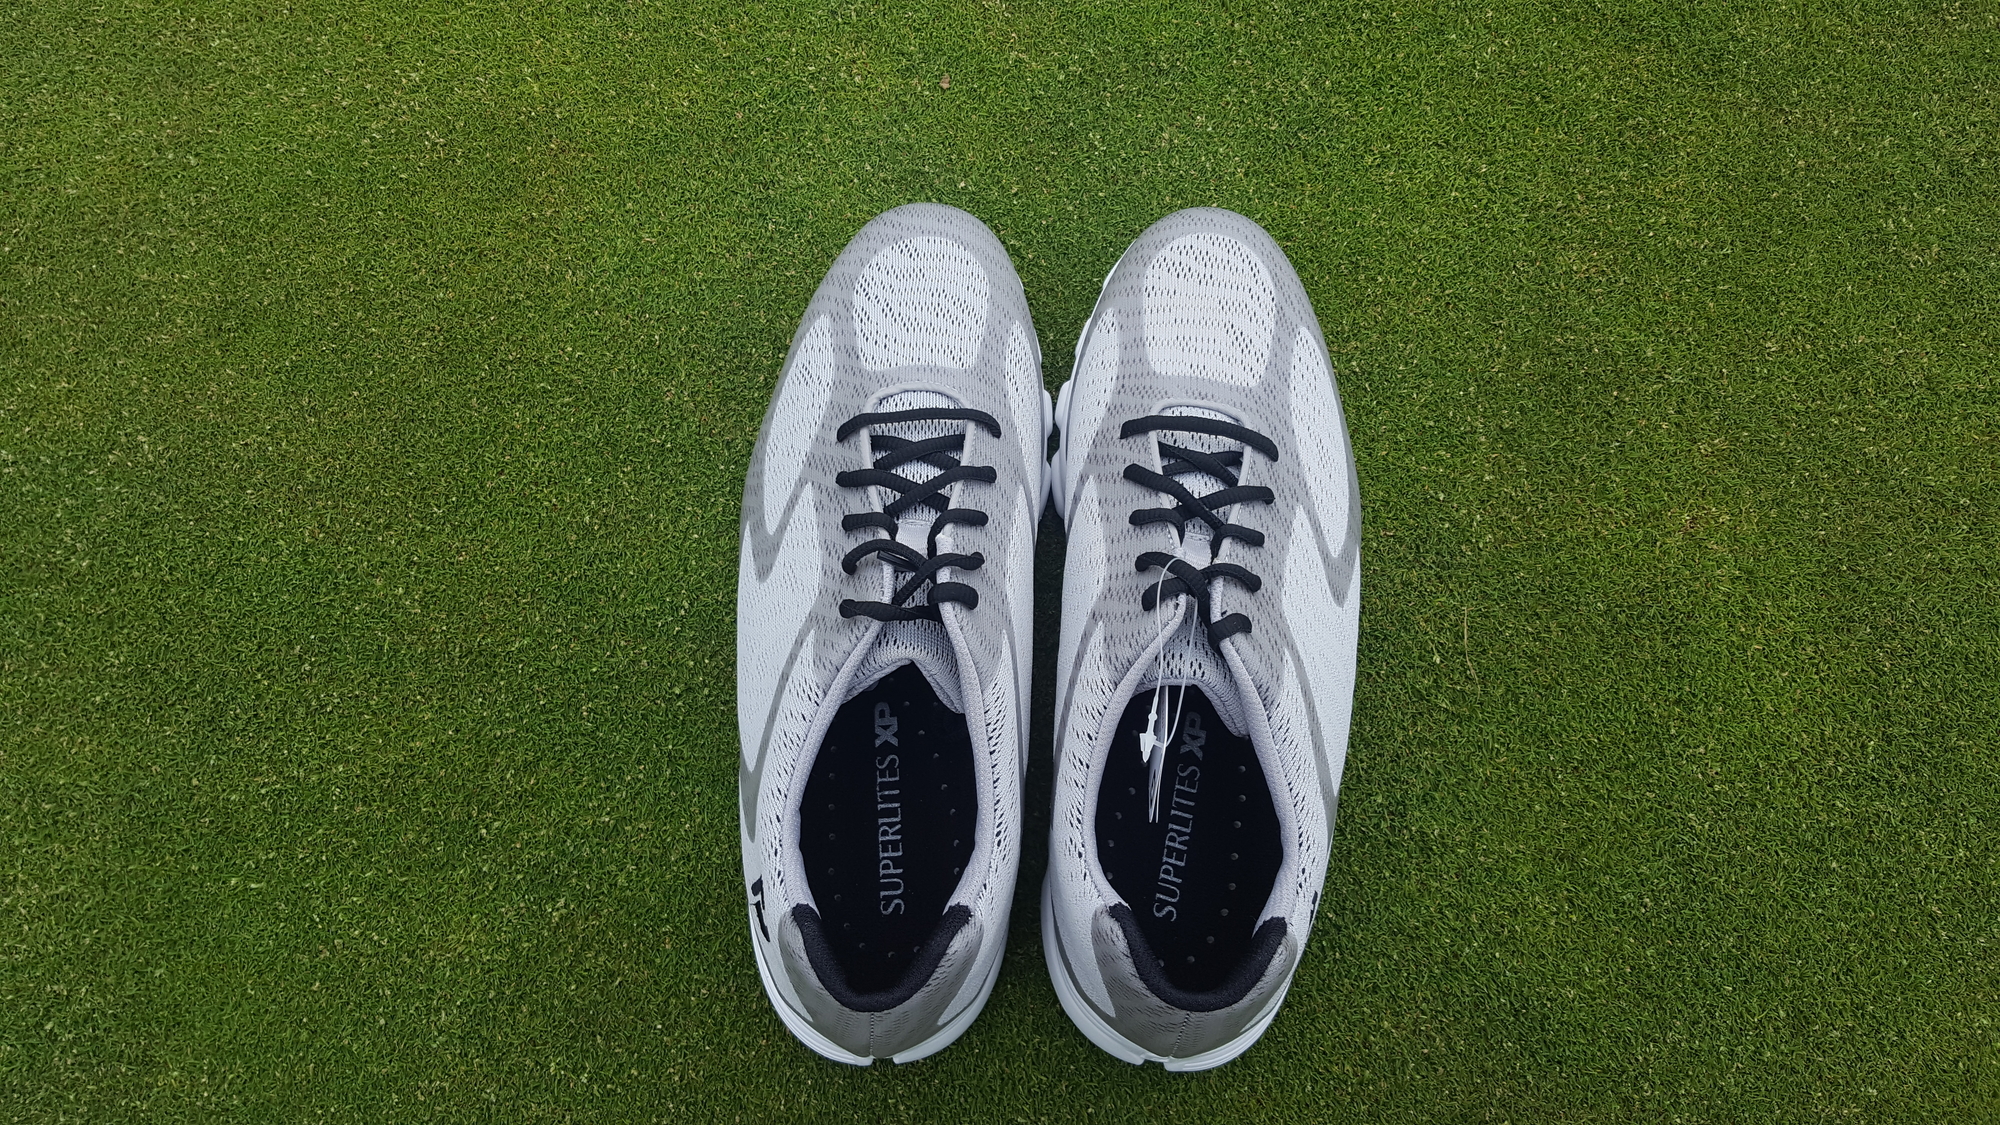 FootJoy Superlites XP spikeless golf shoe review